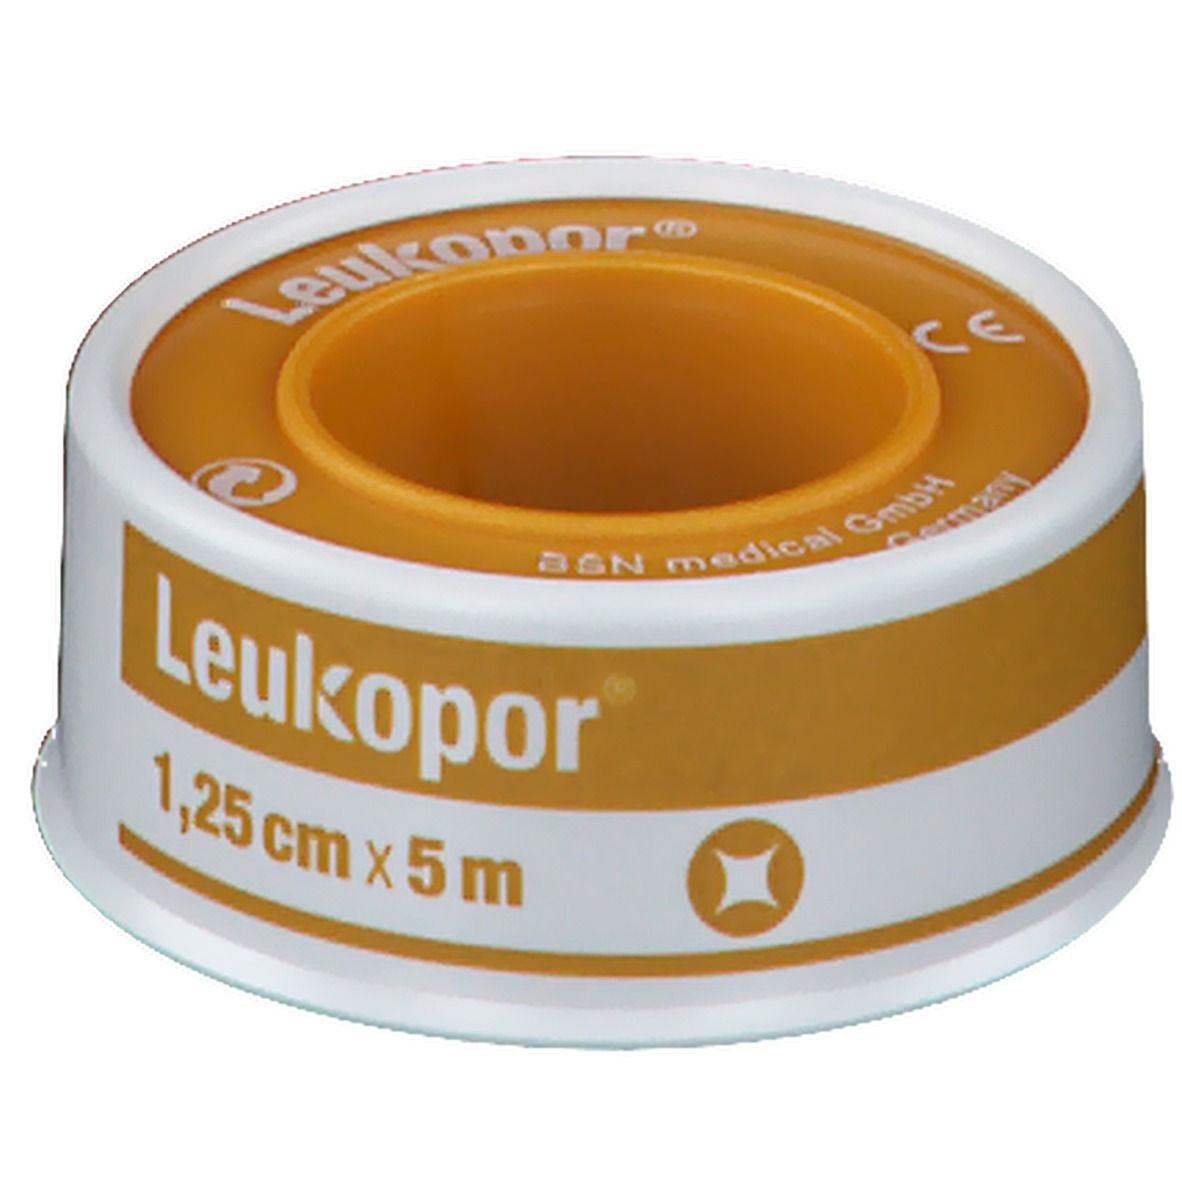 Leukopor® Fixierpflaster 1,25 cm x 5 m